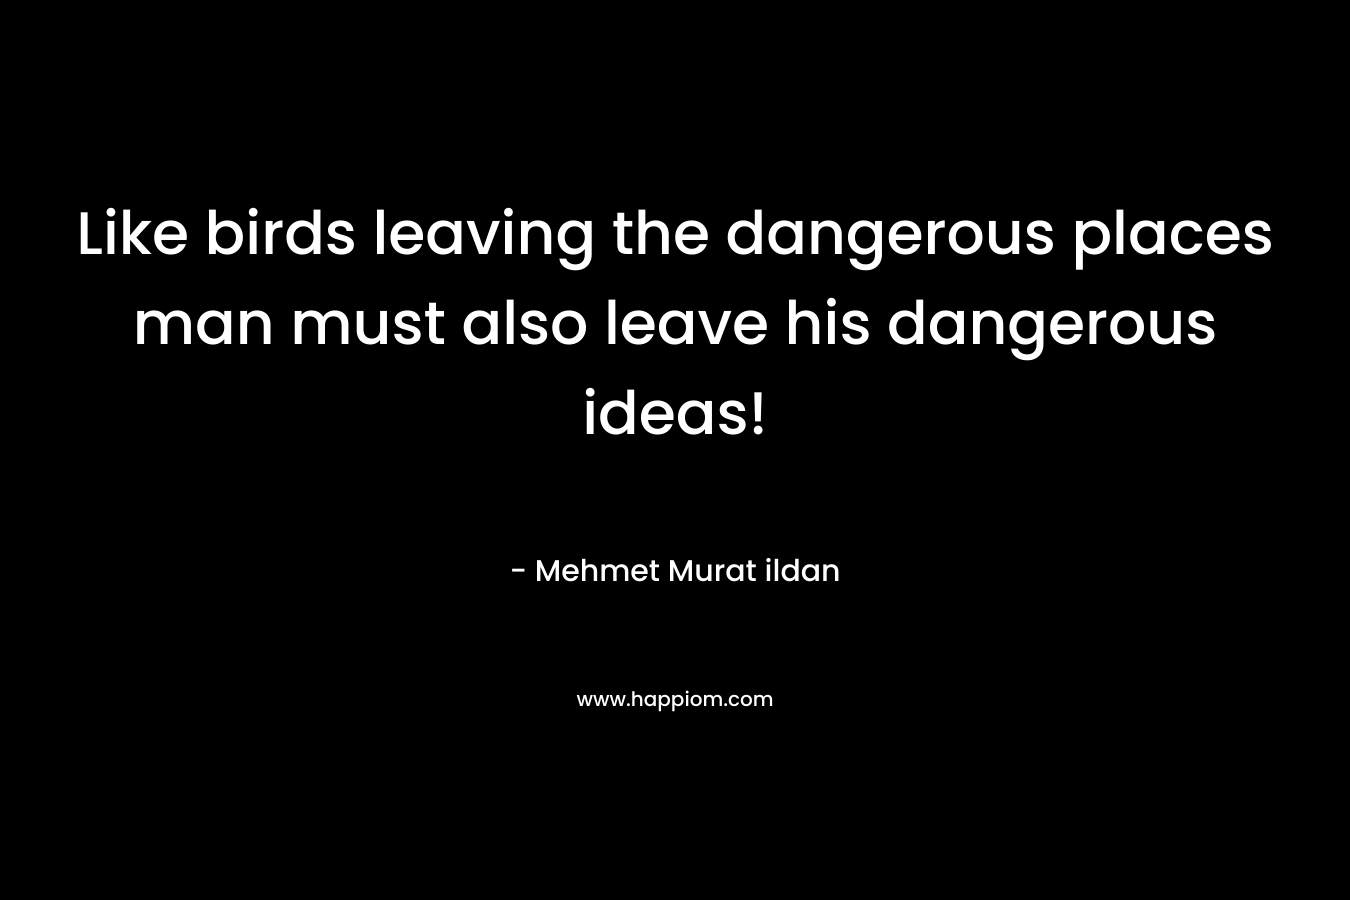 Like birds leaving the dangerous places man must also leave his dangerous ideas!